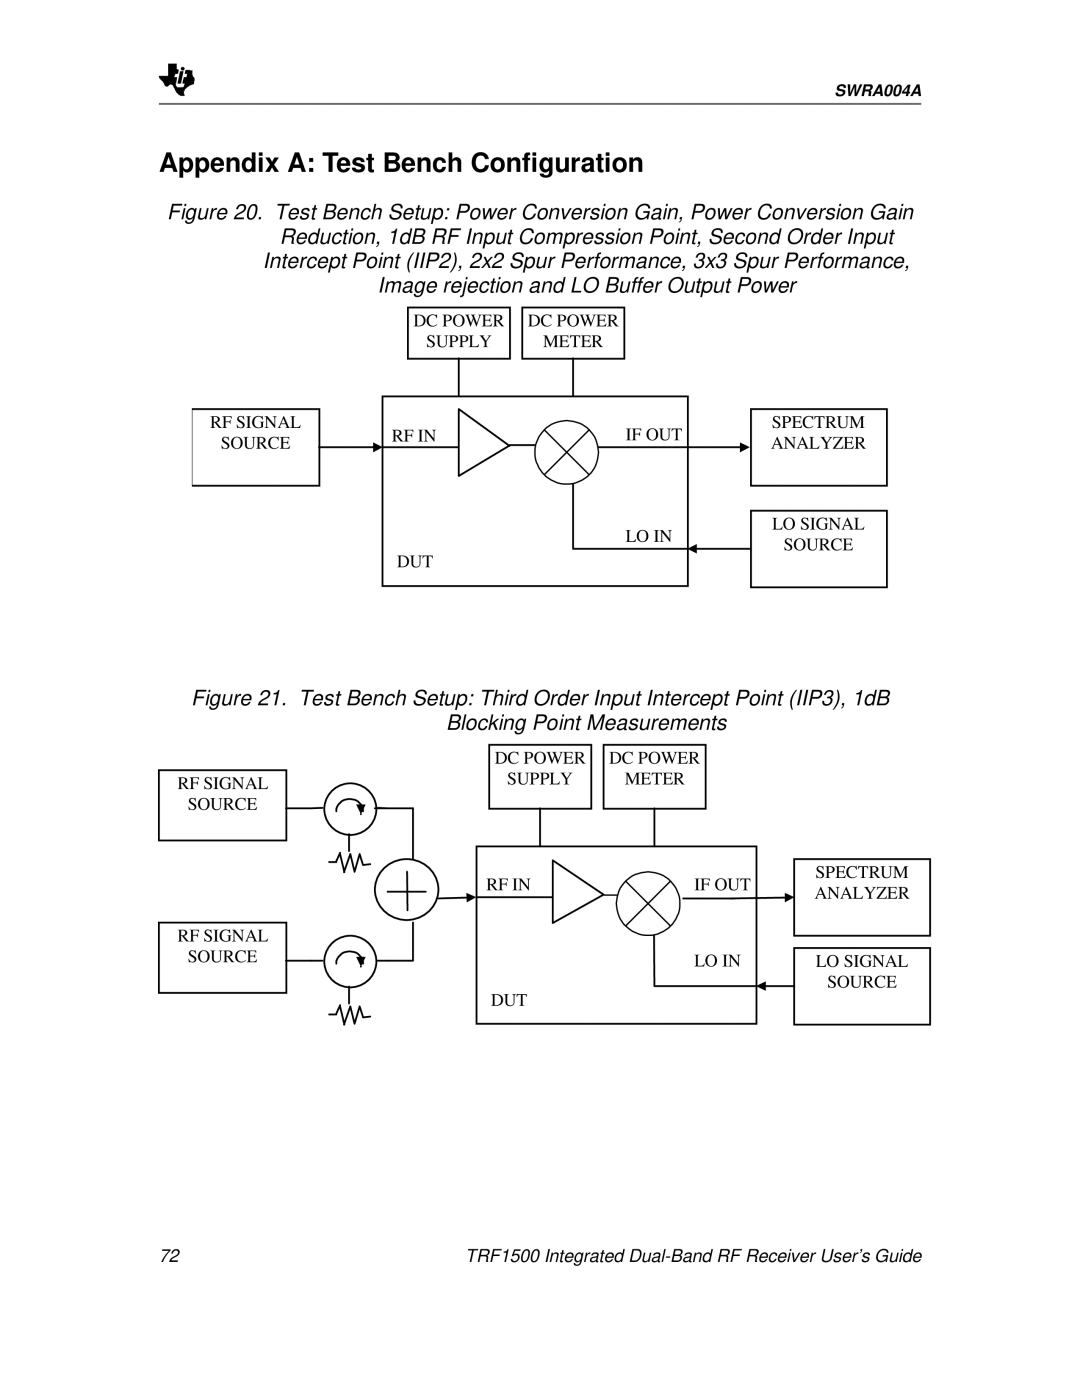 Texas Instruments TRF1500 manual Appendix A Test Bench Configuration 